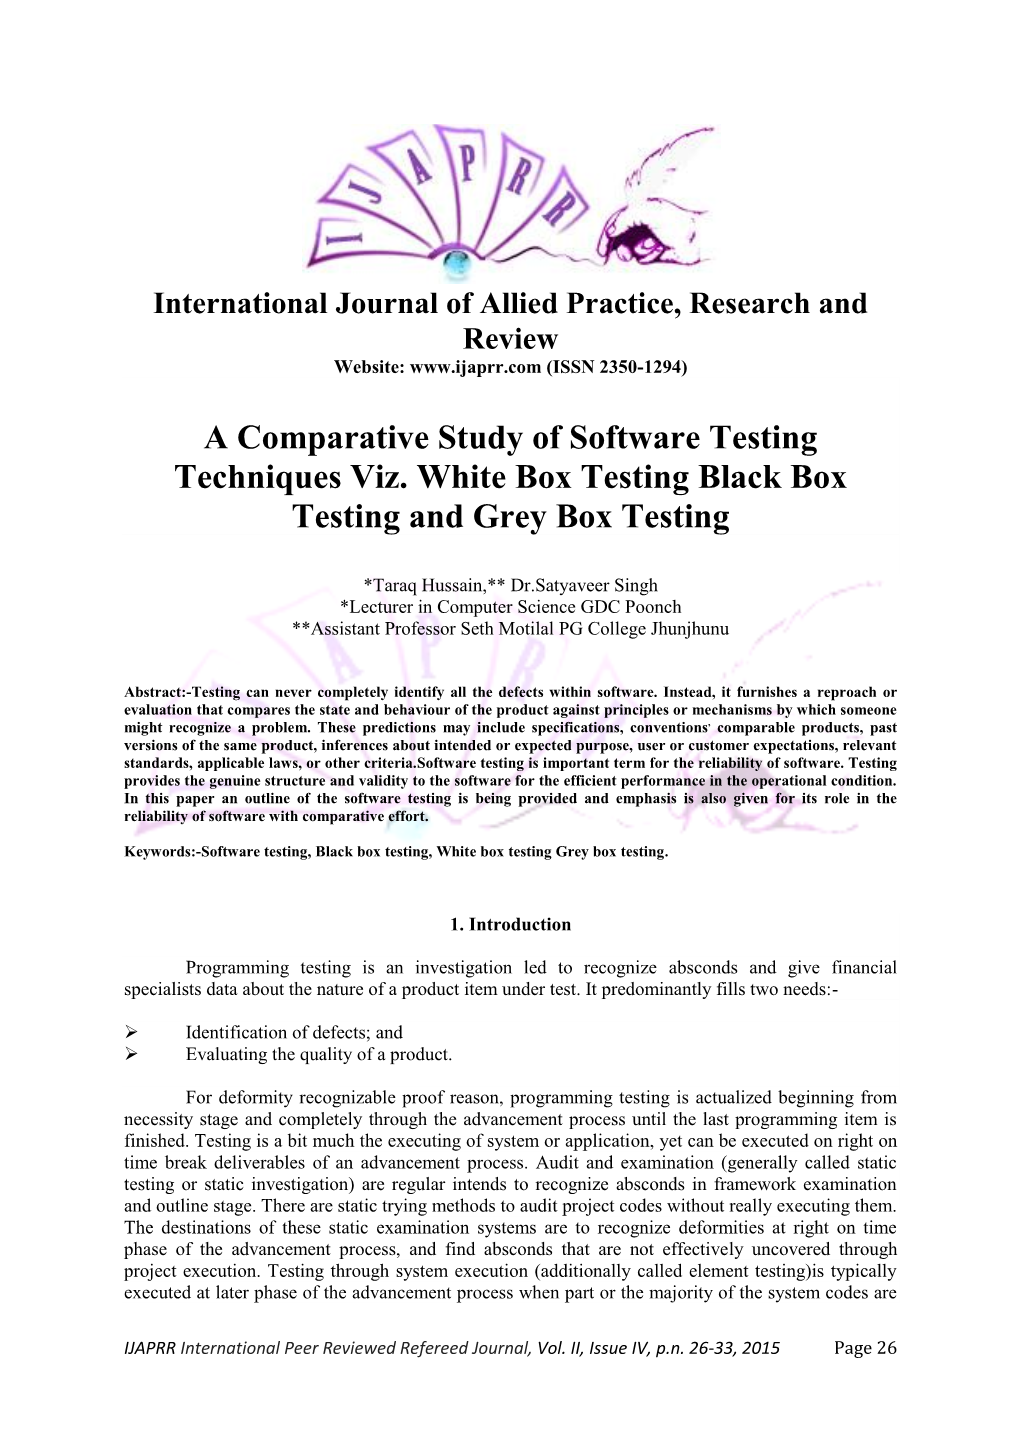 A Comparative Study of Software Testing Techniques Viz. White Box Testing Black Box Testing and Grey Box Testing